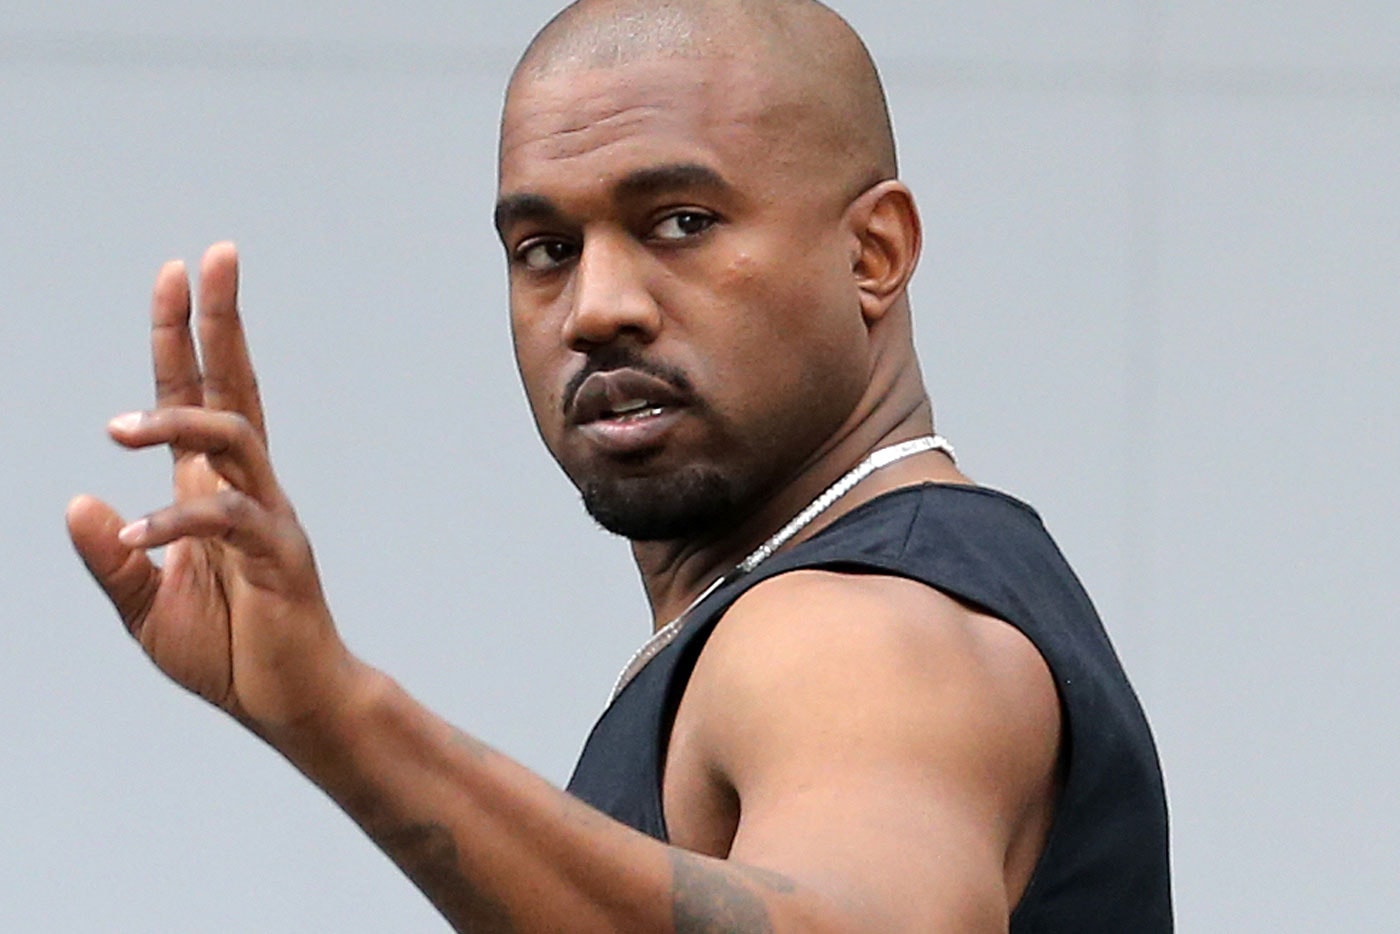 GQ's "Most Stylish Man" of 2015: Kanye West